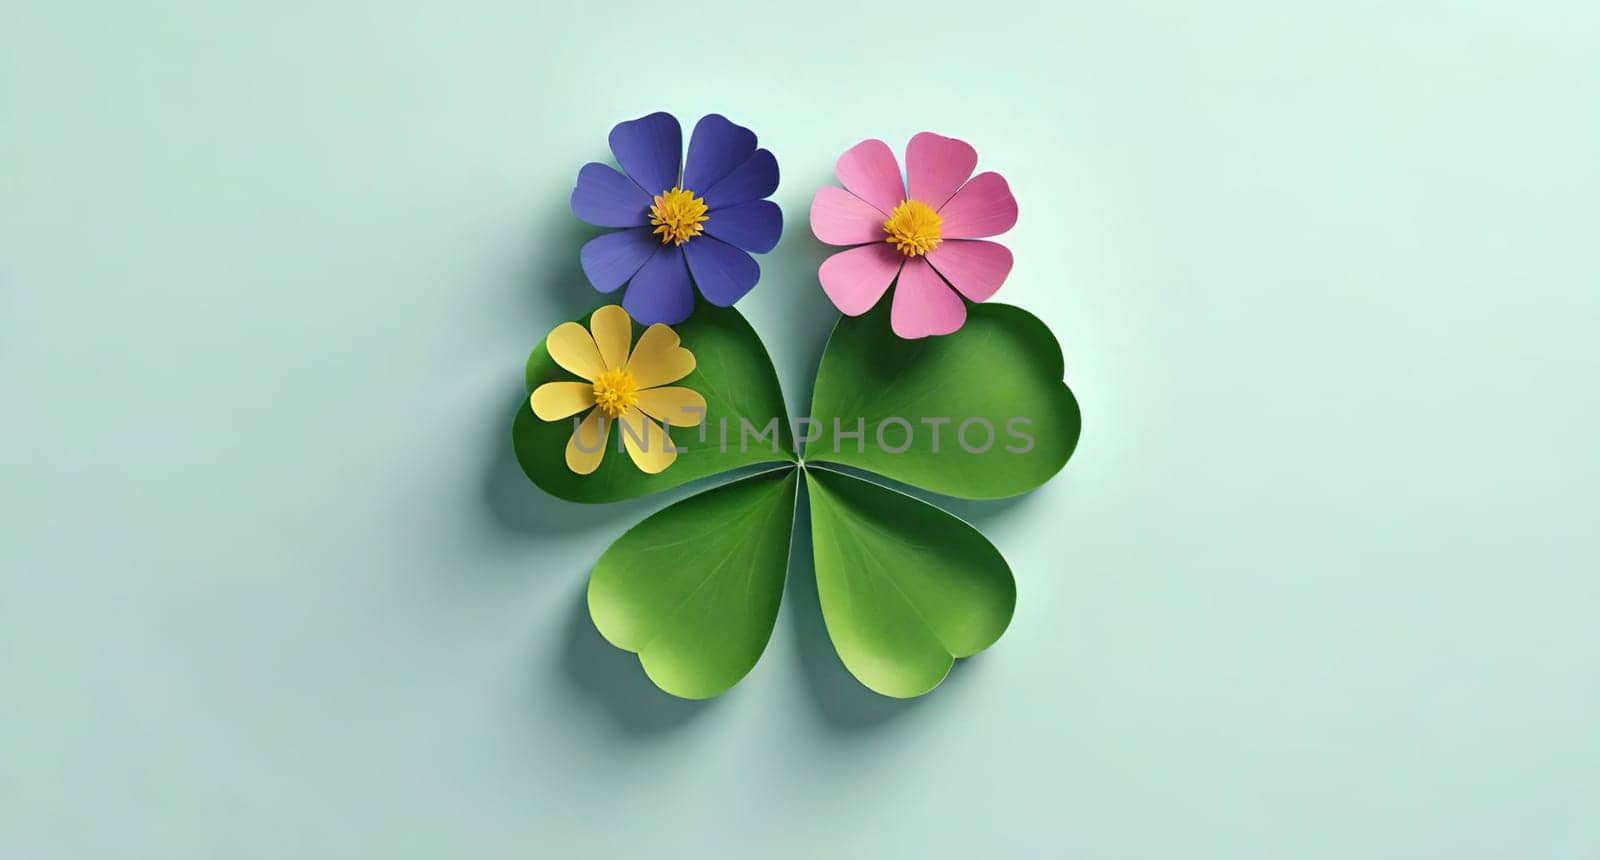 Clover with flowers on background. 3d illustration.3d render of four leaf clover with flower .clover leaf with flower.